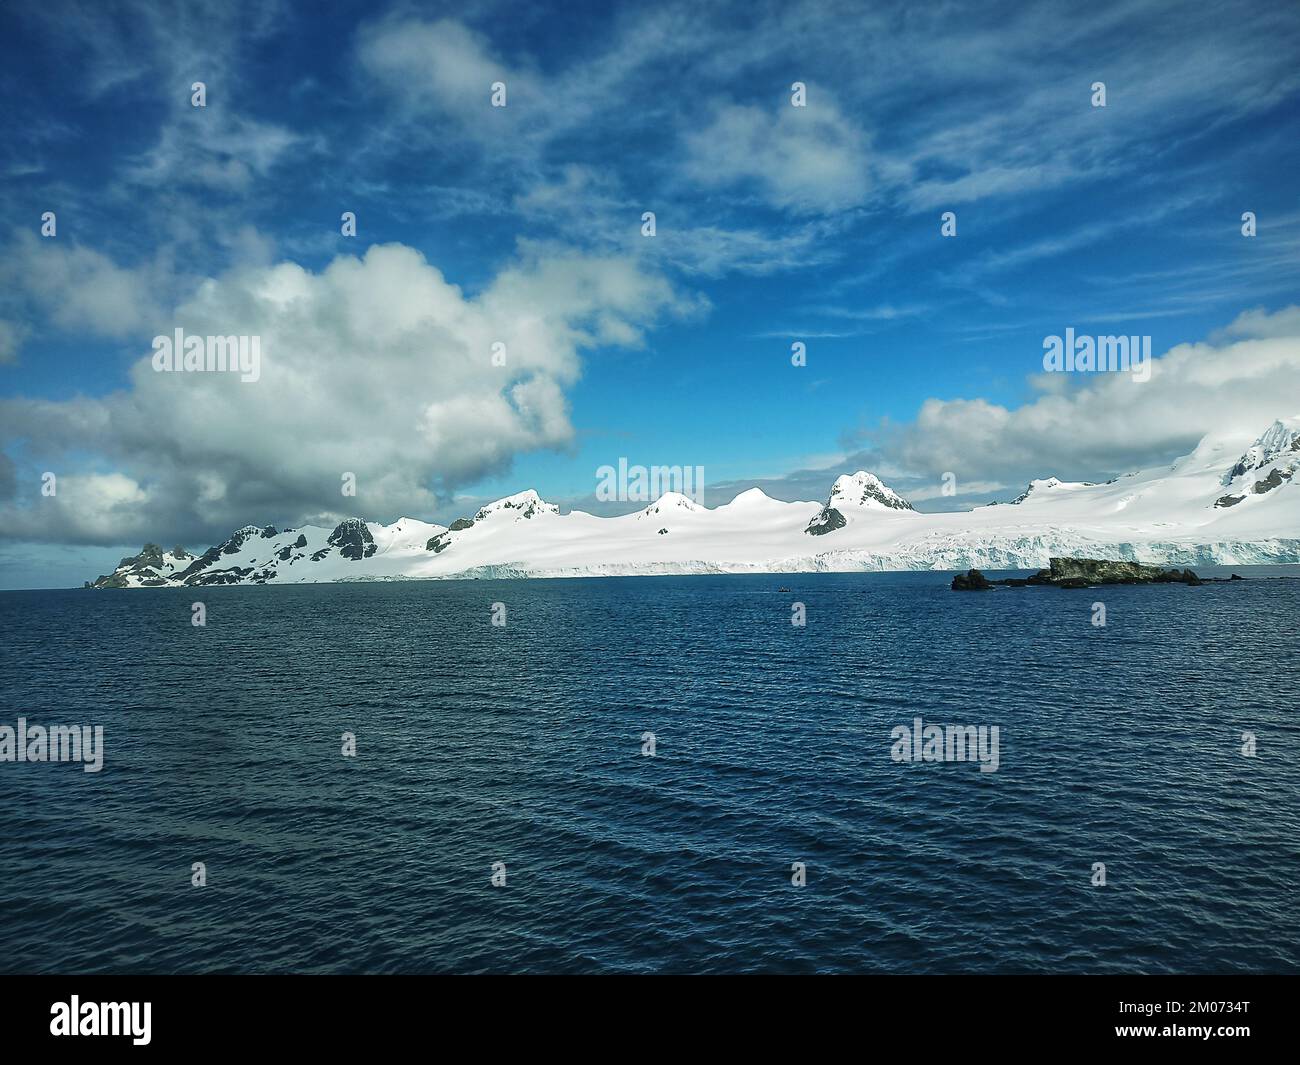 Half moon island,antarctica,antartica,antarctic peninsula,ice filled mountains in antarctica,antarctica landscape,climate change in antarctica,ice Stock Photo